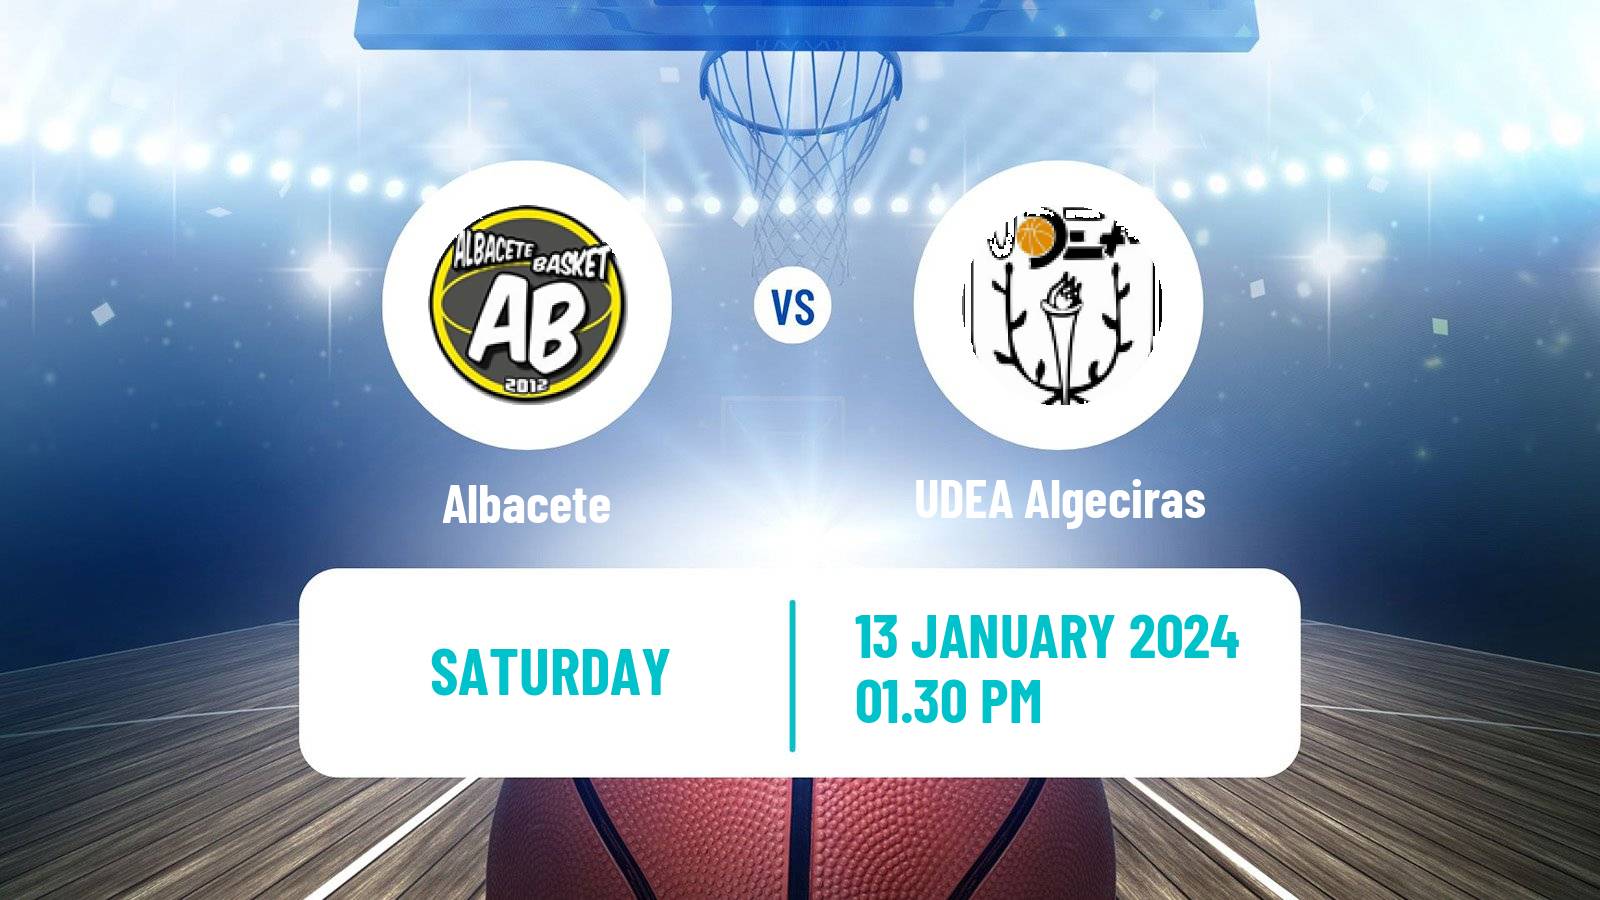 Basketball Spanish LEB Plata Albacete - UDEA Algeciras